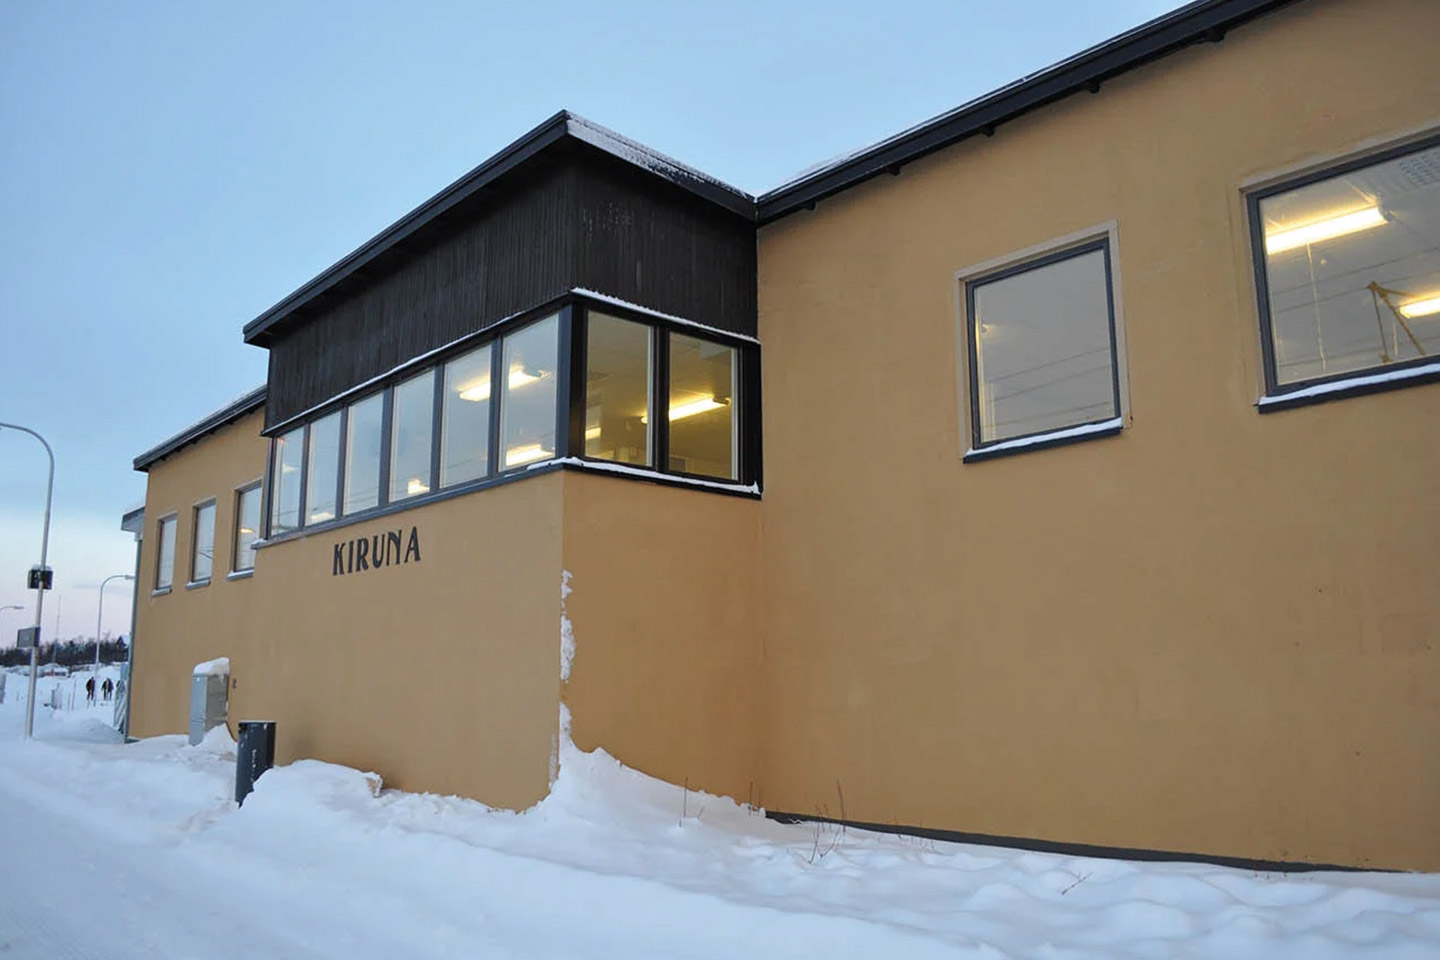 Station Kiruna